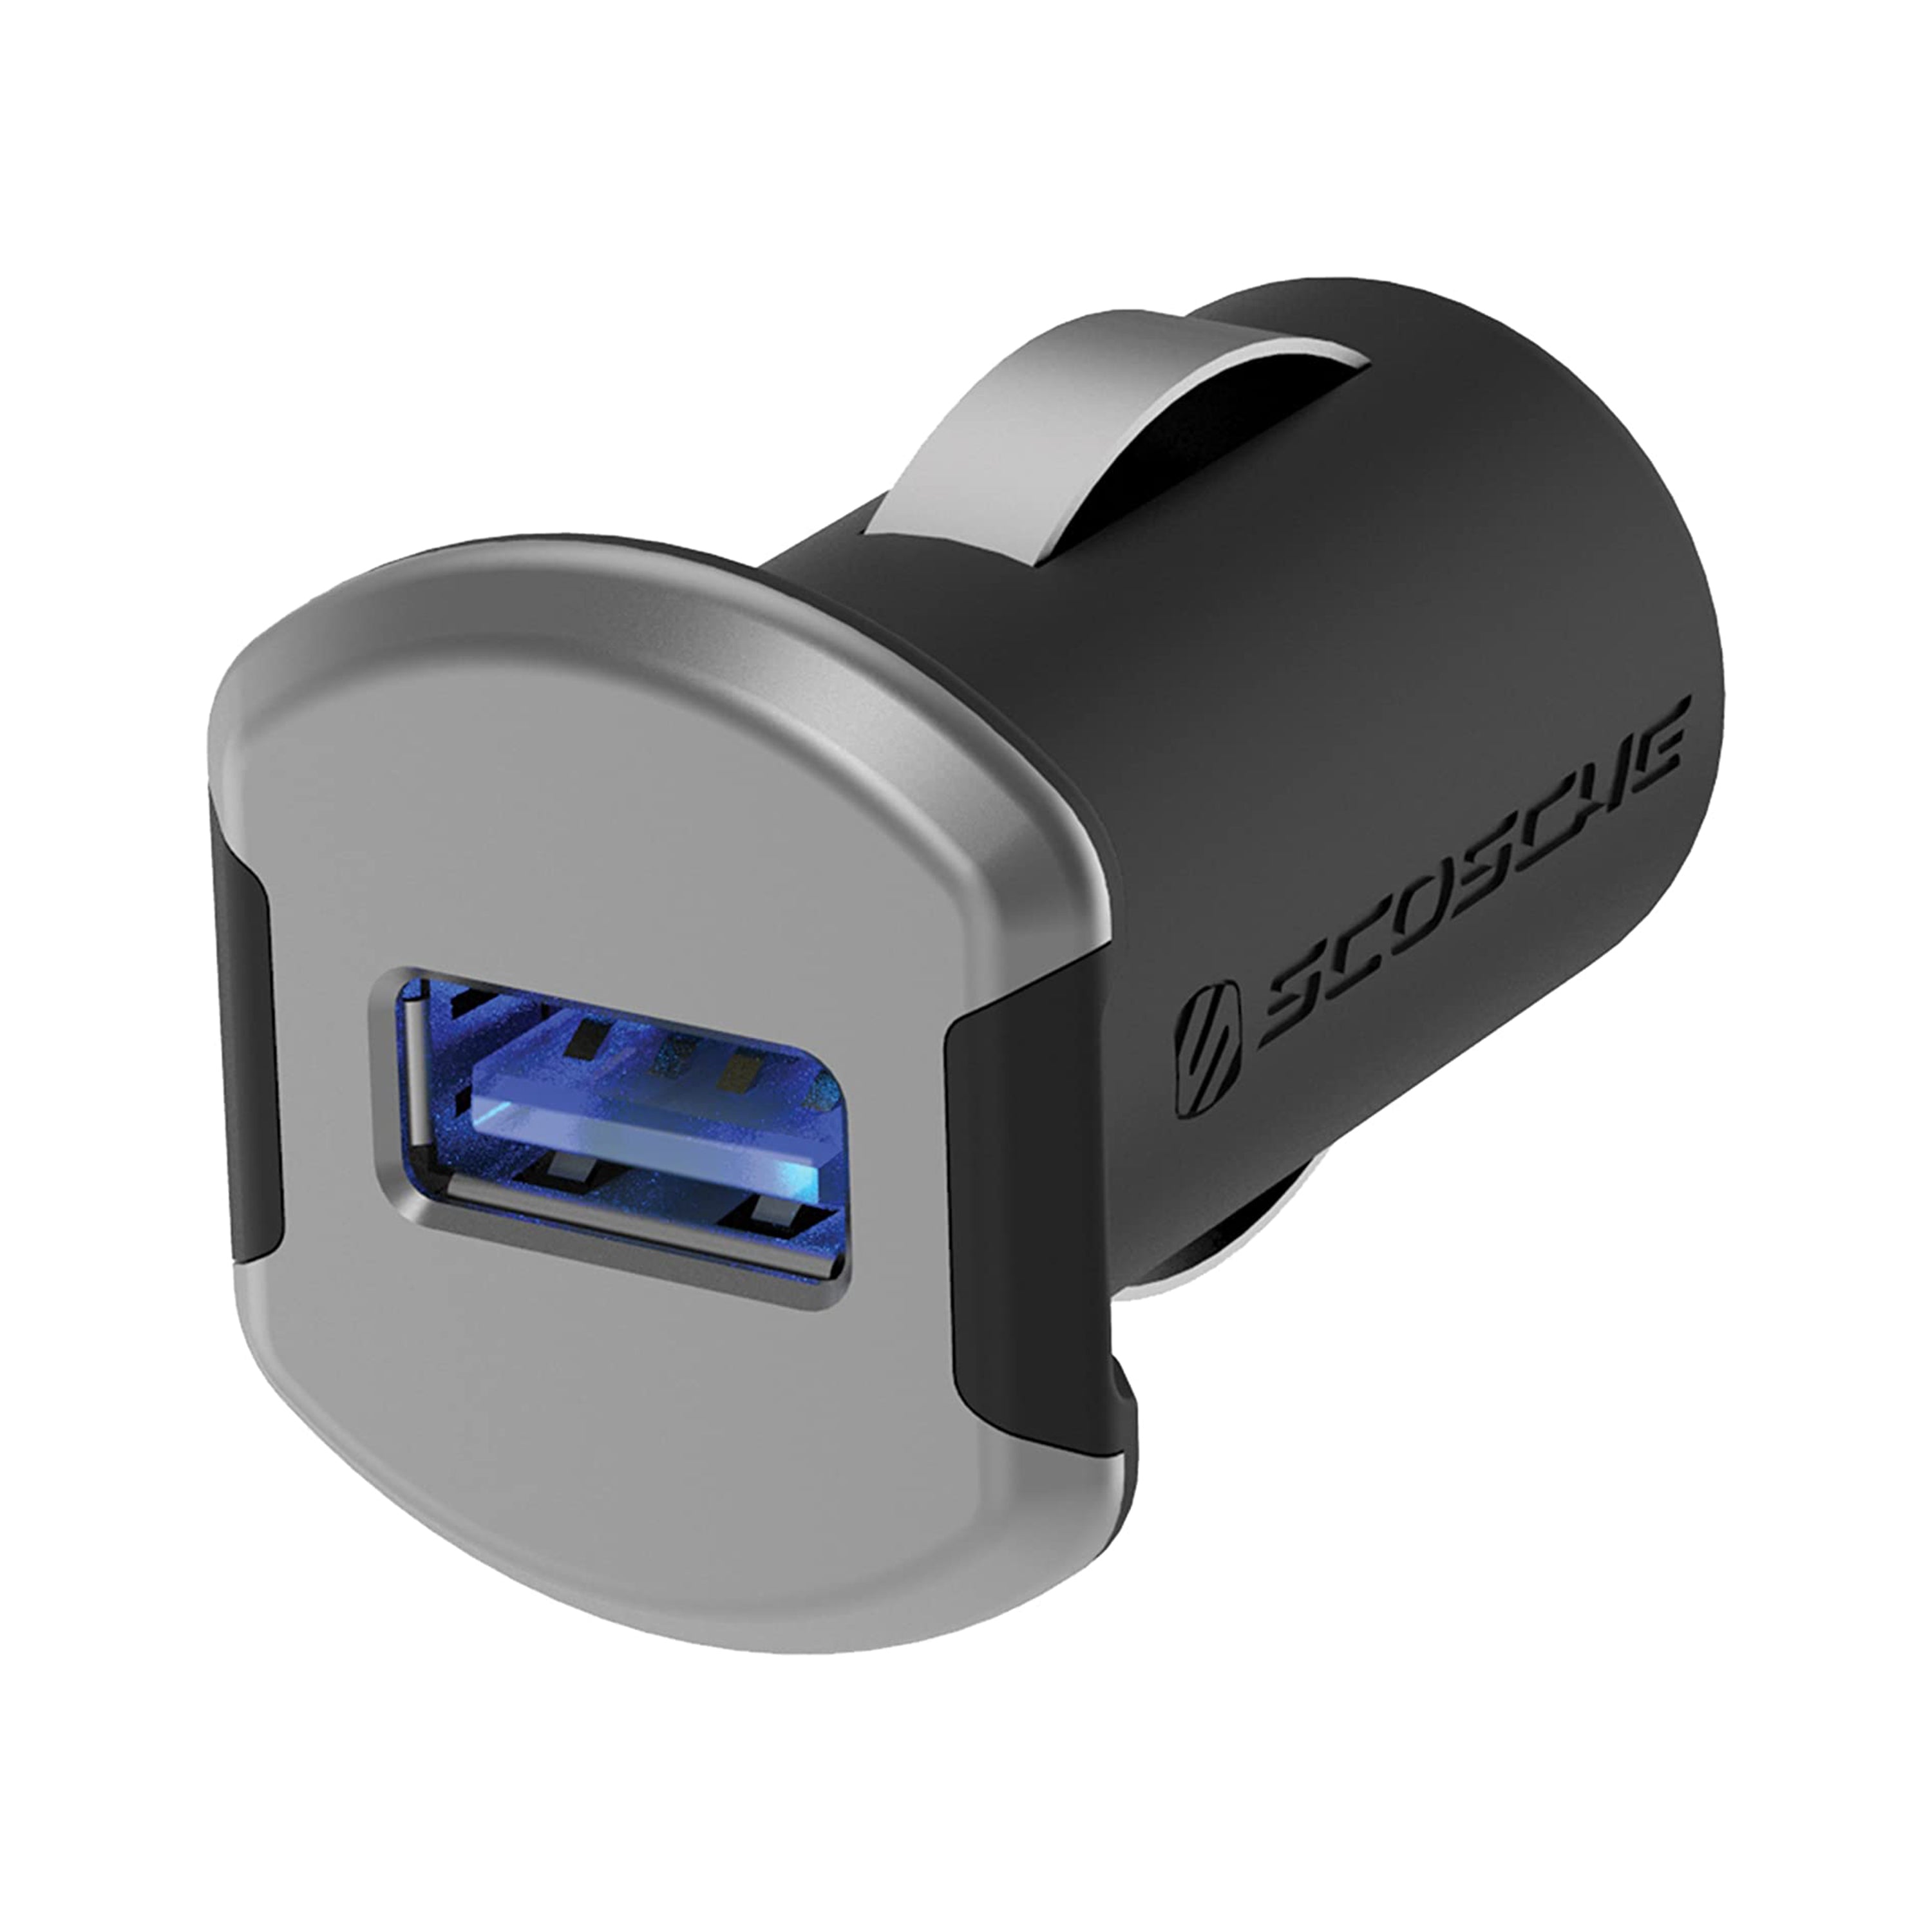 Scosche USBC121MSG, 12W USB Car Charger w/ Illuminated USB Port (Black/Space Gray)